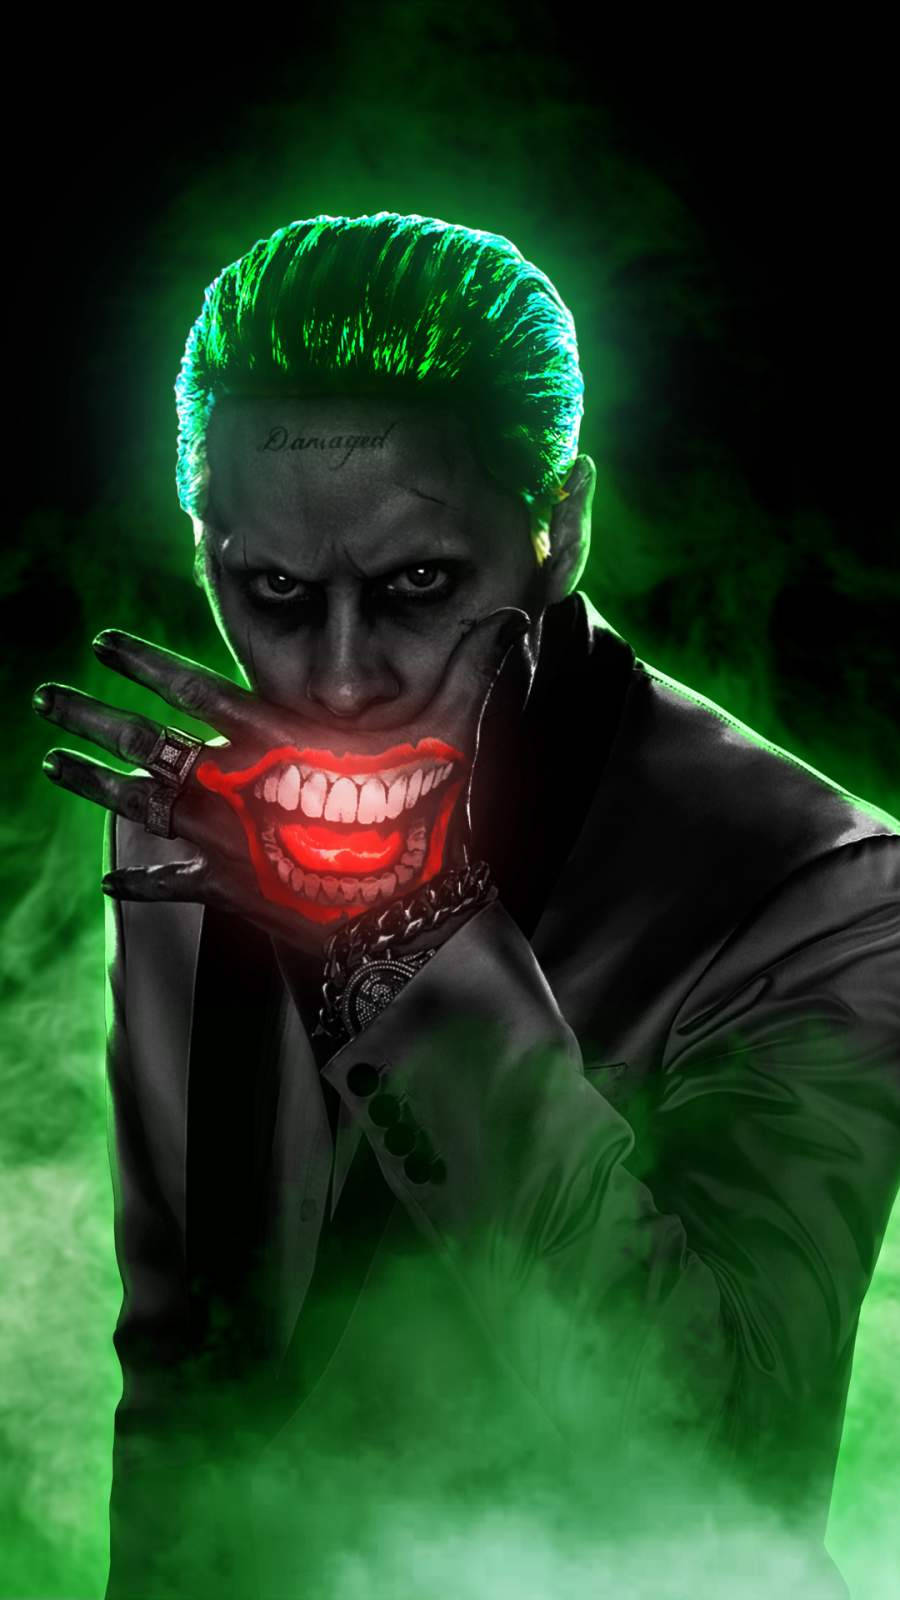 Caption: Captivating Green Joker Image For Iphone Wallpaper